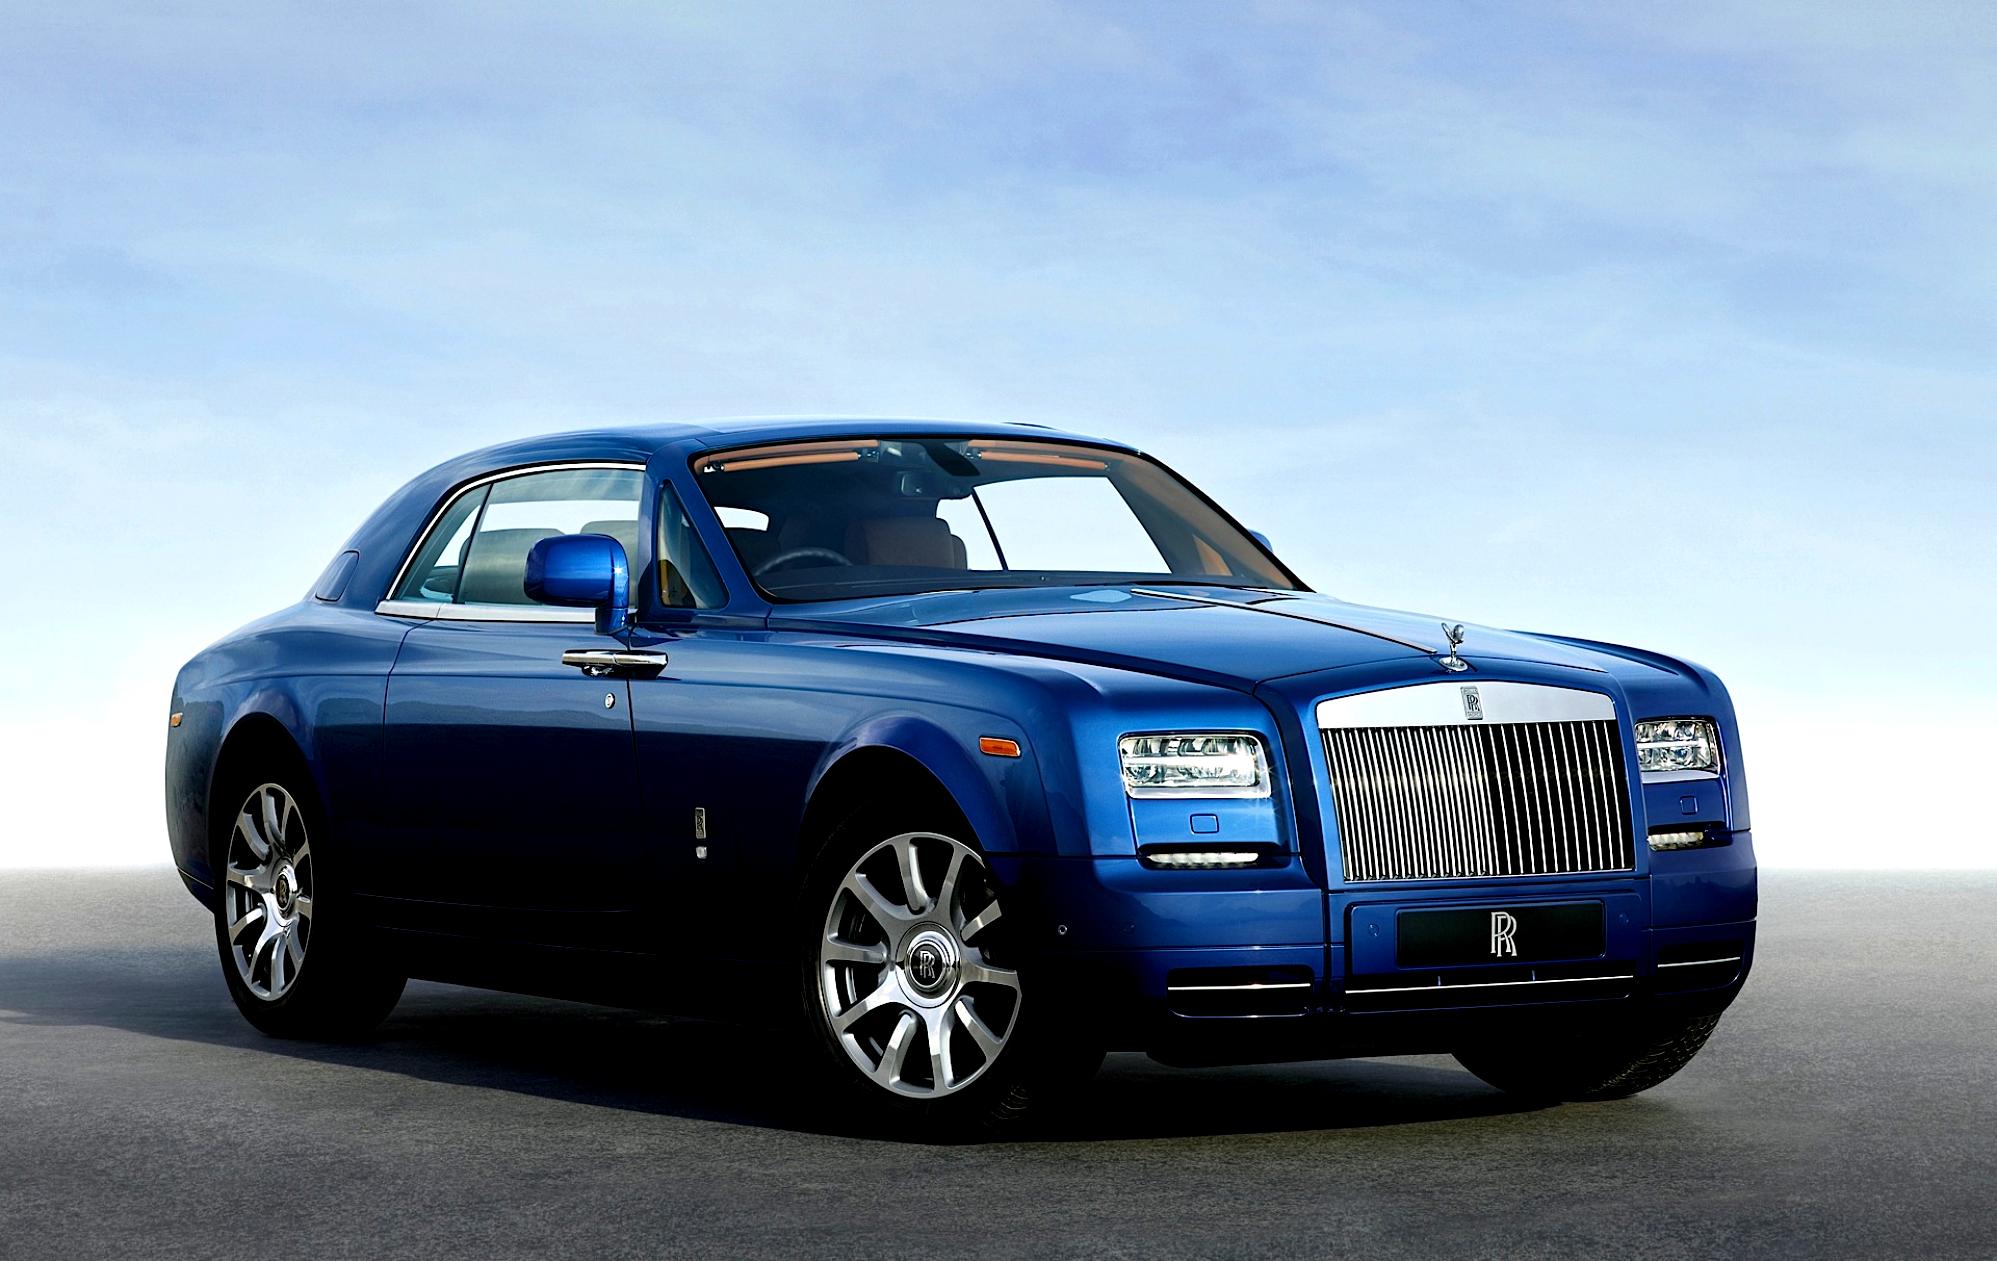 Rolls-Royce Phantom Coupe 2008 #69